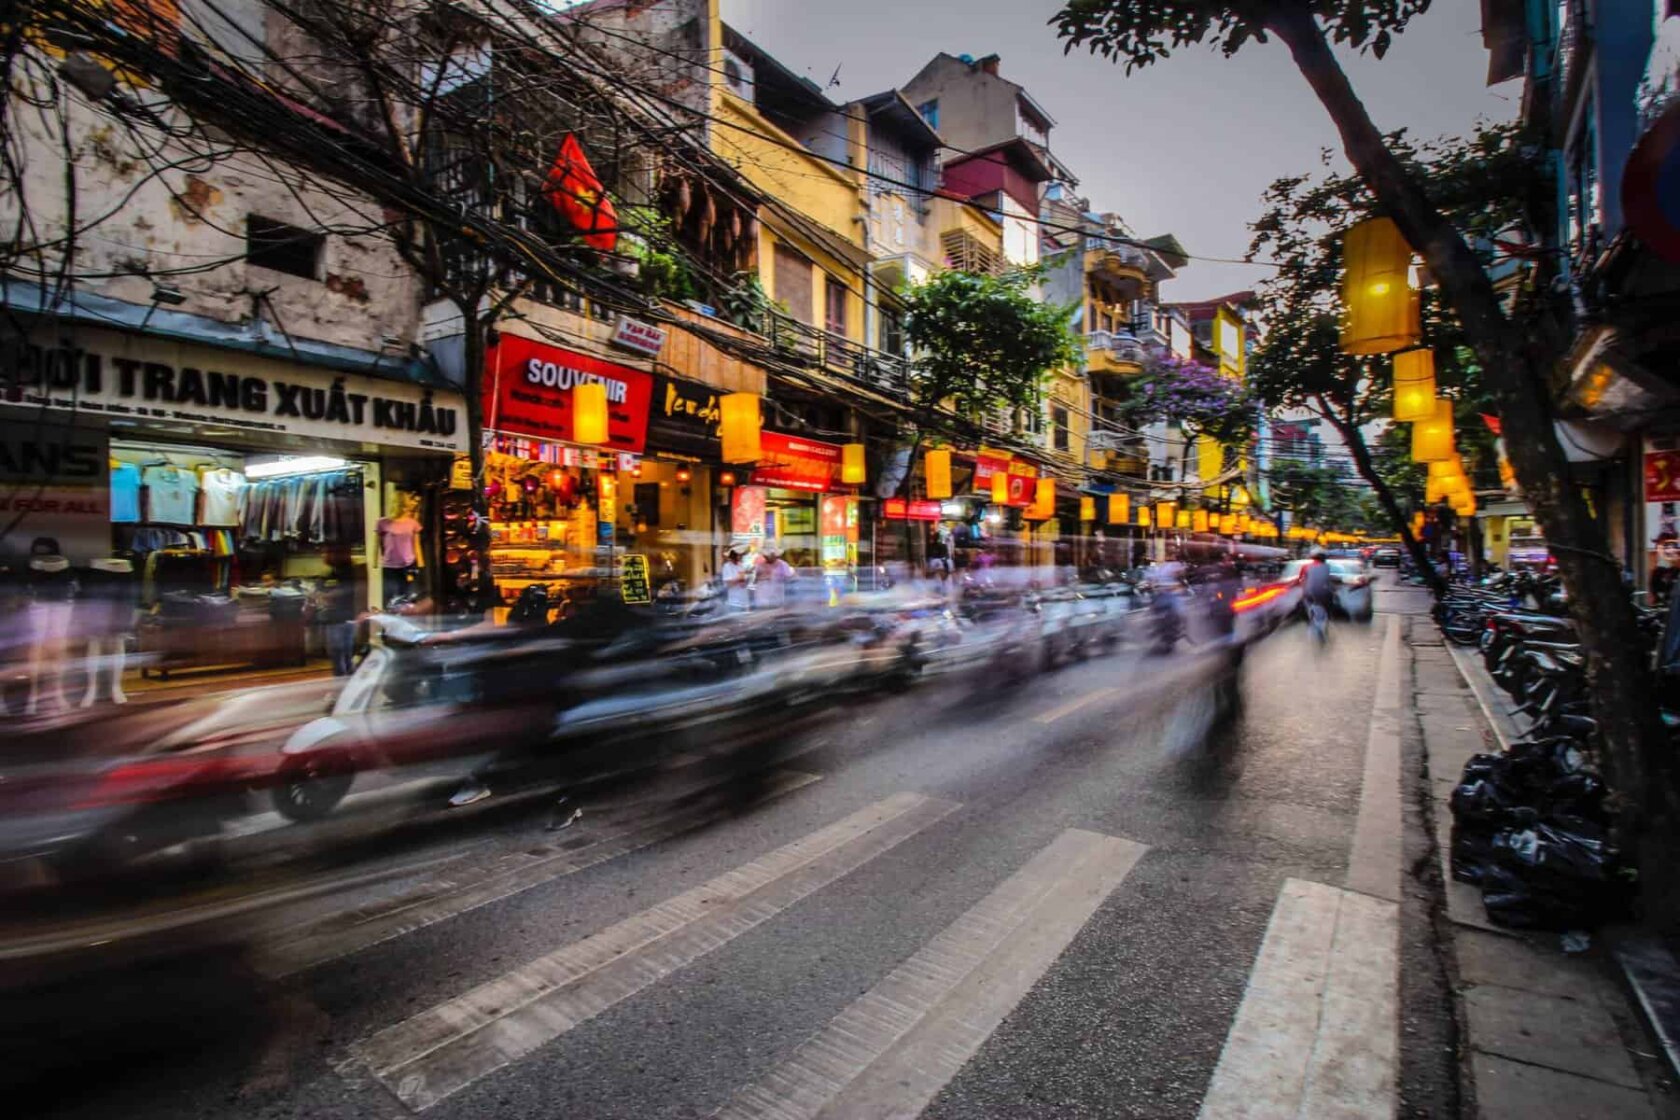 A busy street in Hanoi, Vietnam